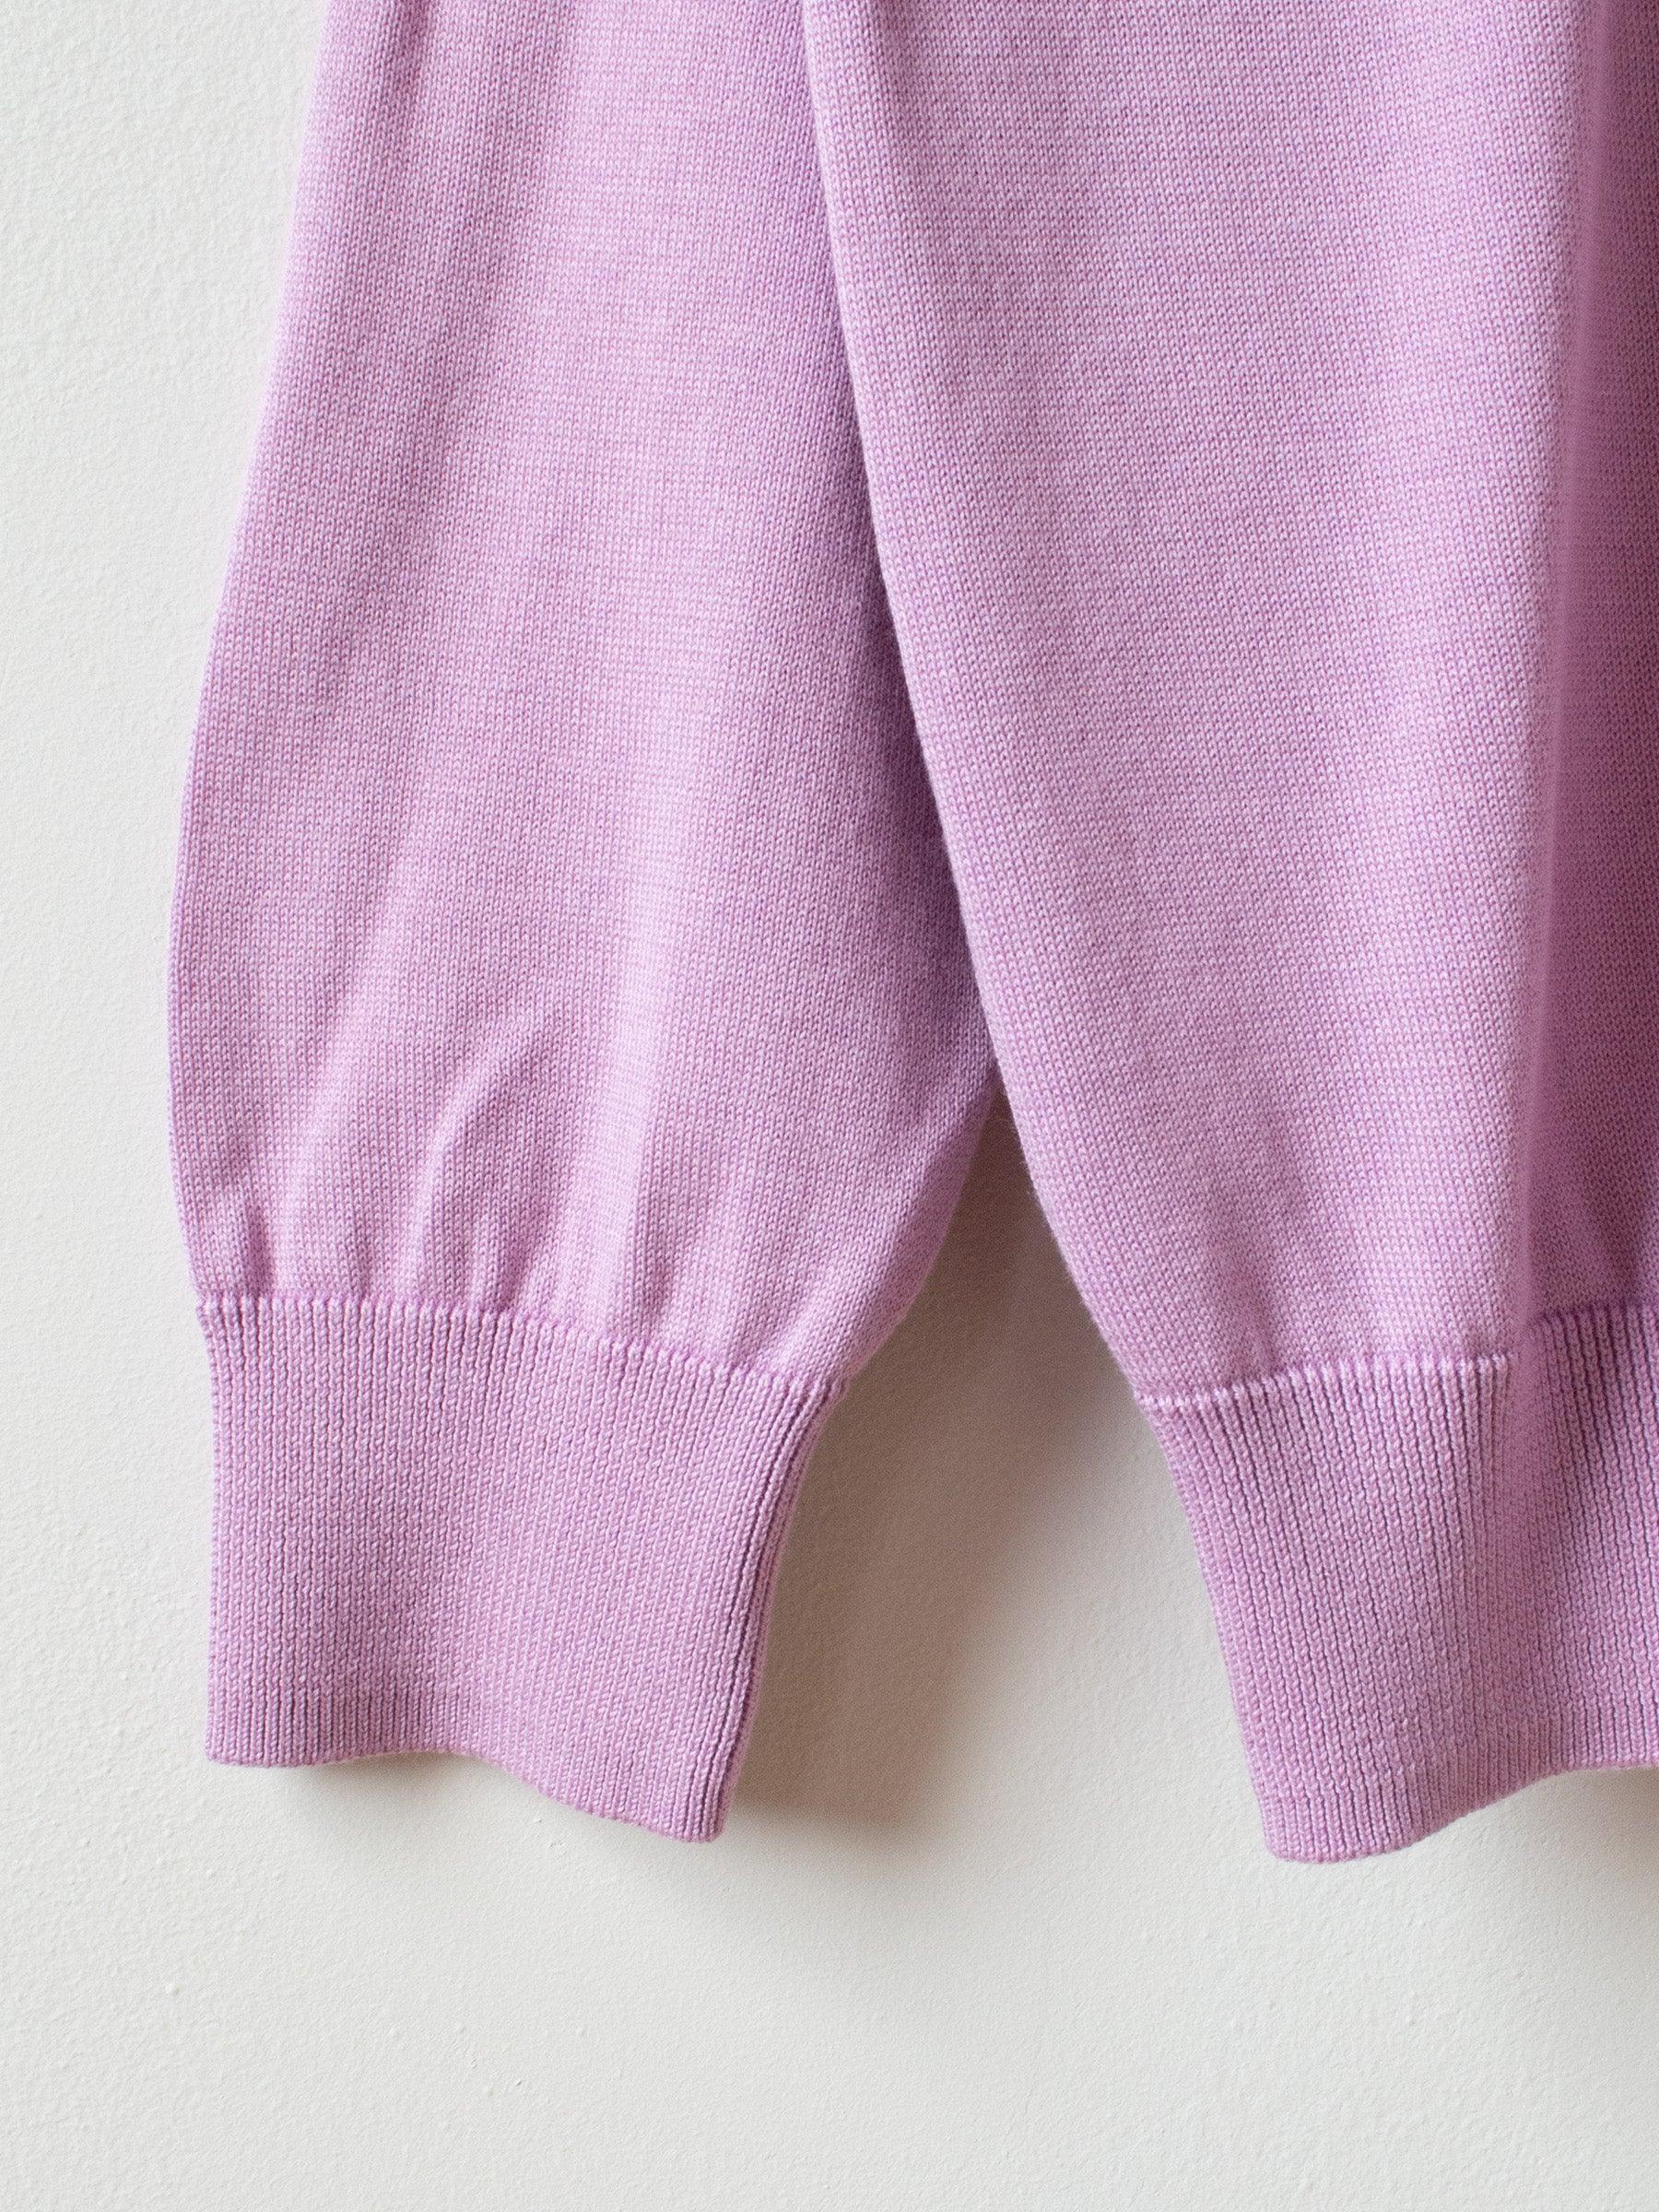 Namu Shop - Fujito Co Silk C/N Knit Sweater - Lavender